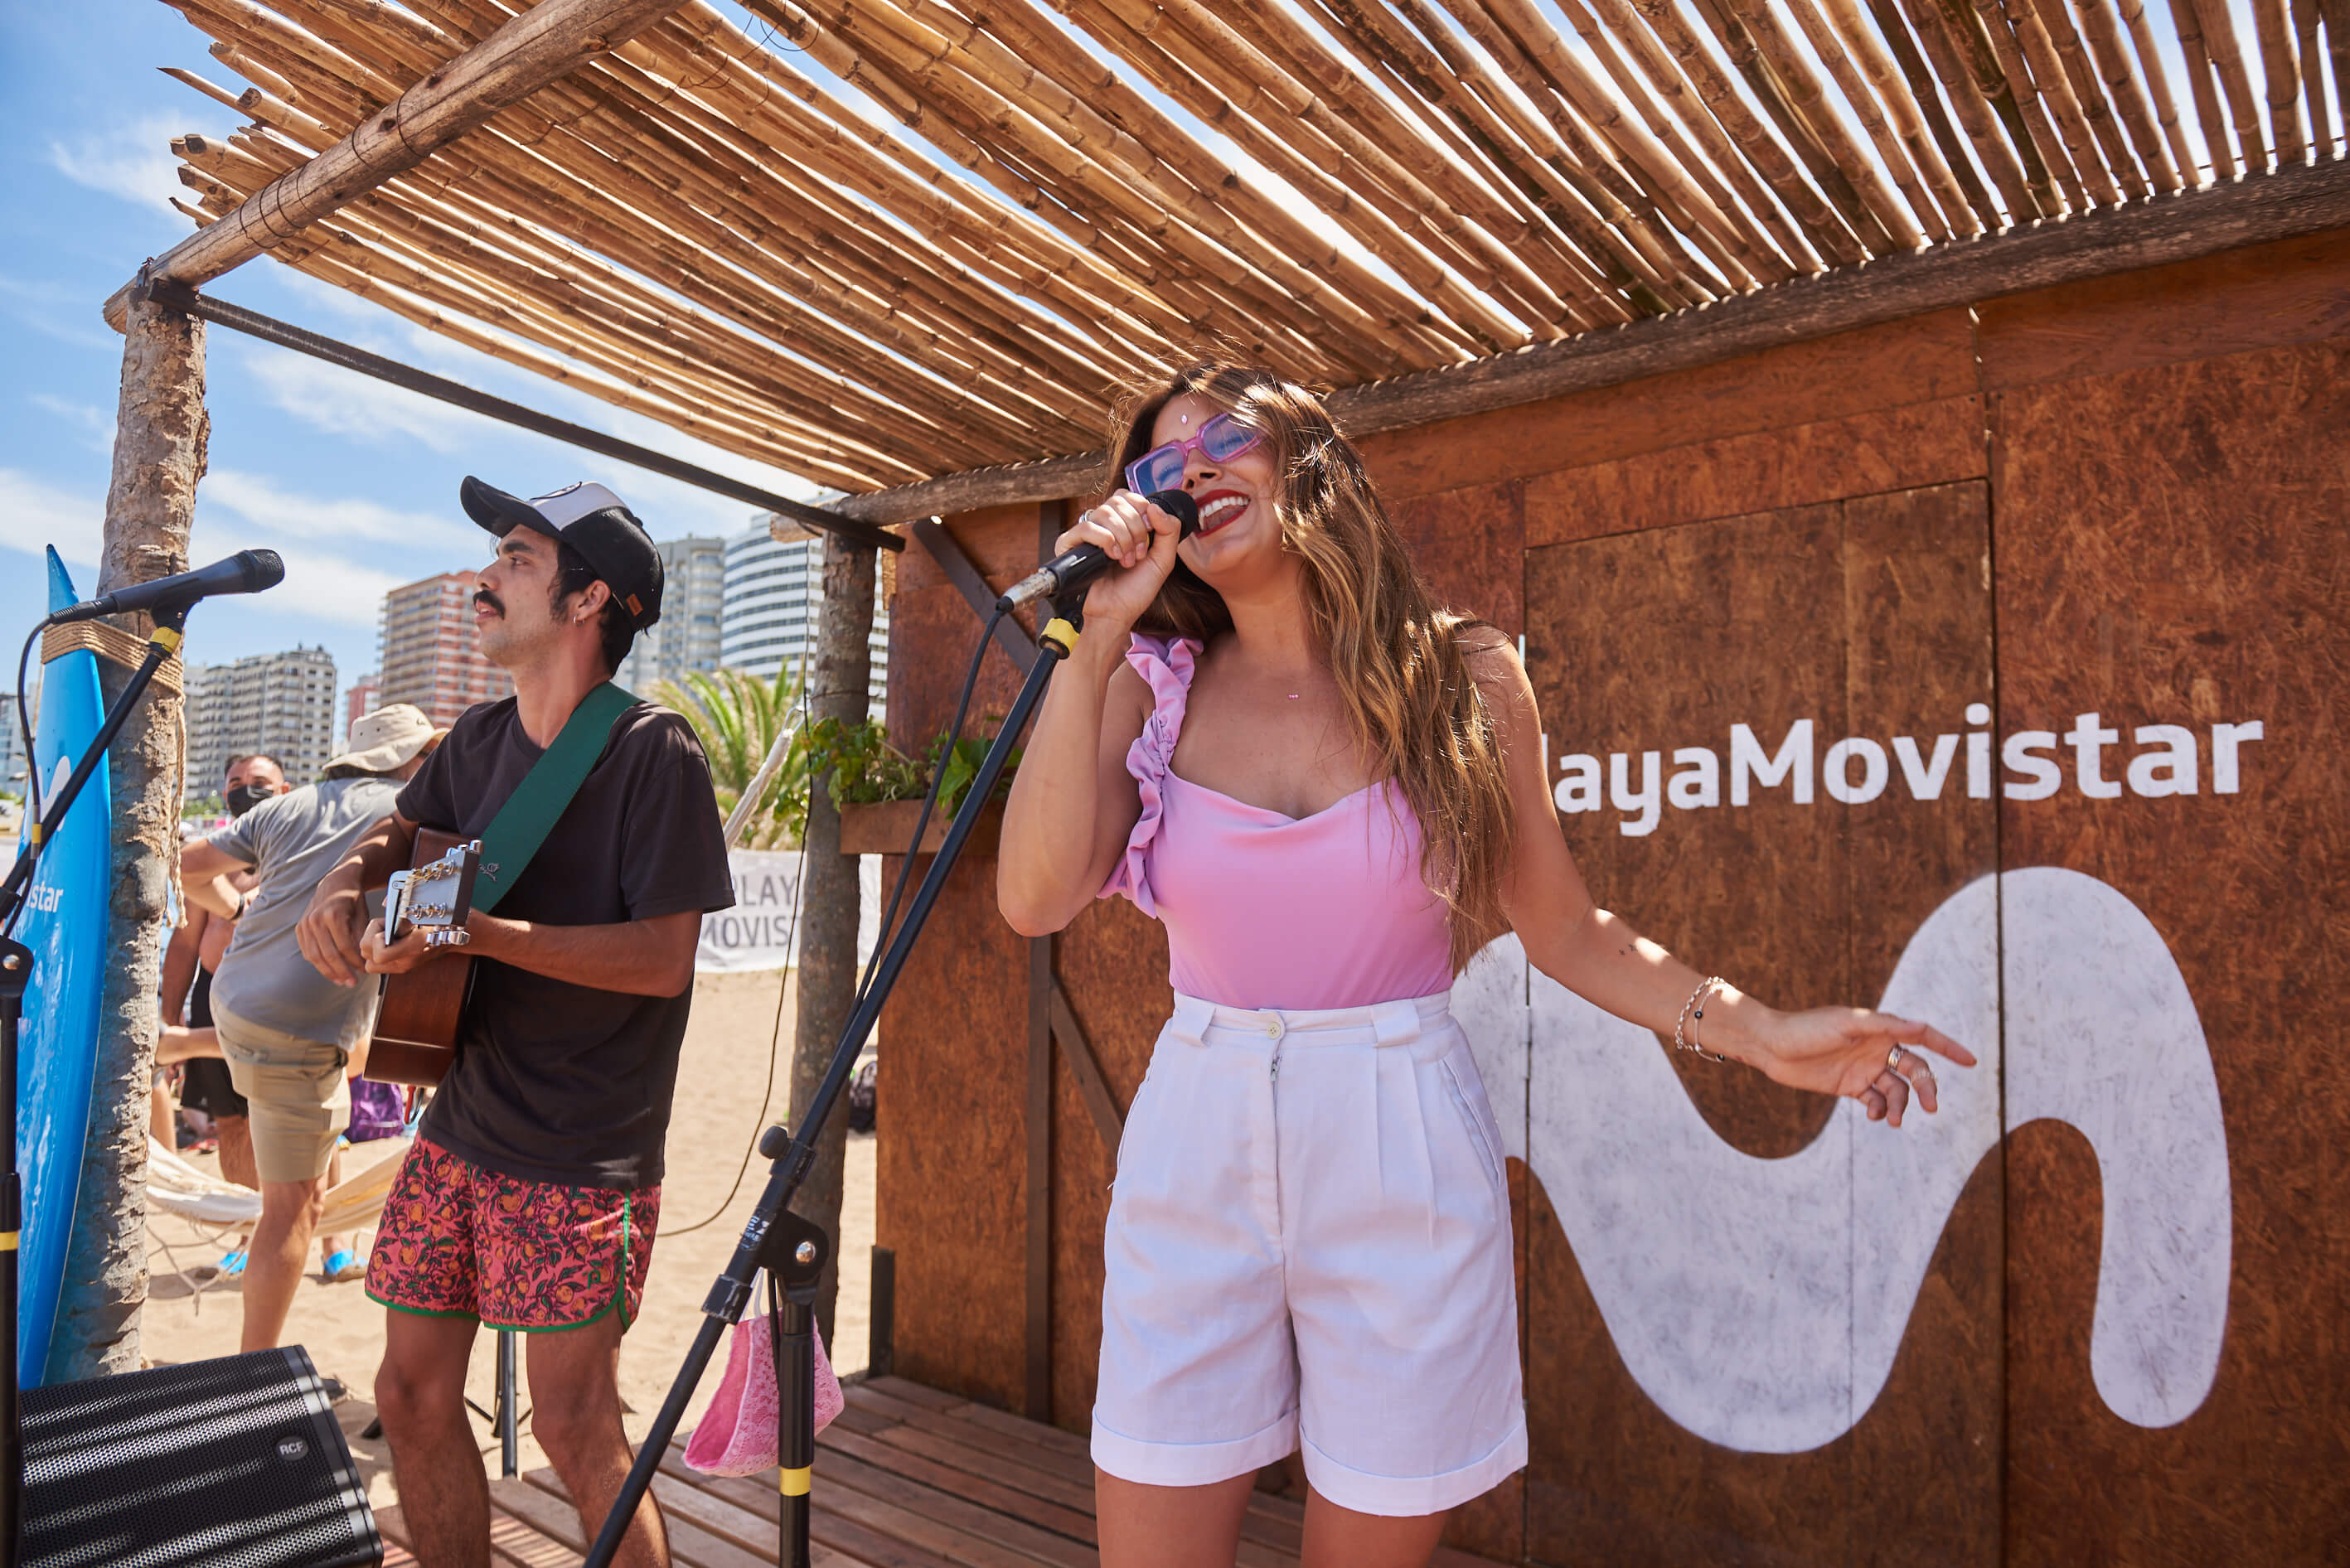 Se inauguró la Playa Movistar con un show acústico de Natalie Pérez